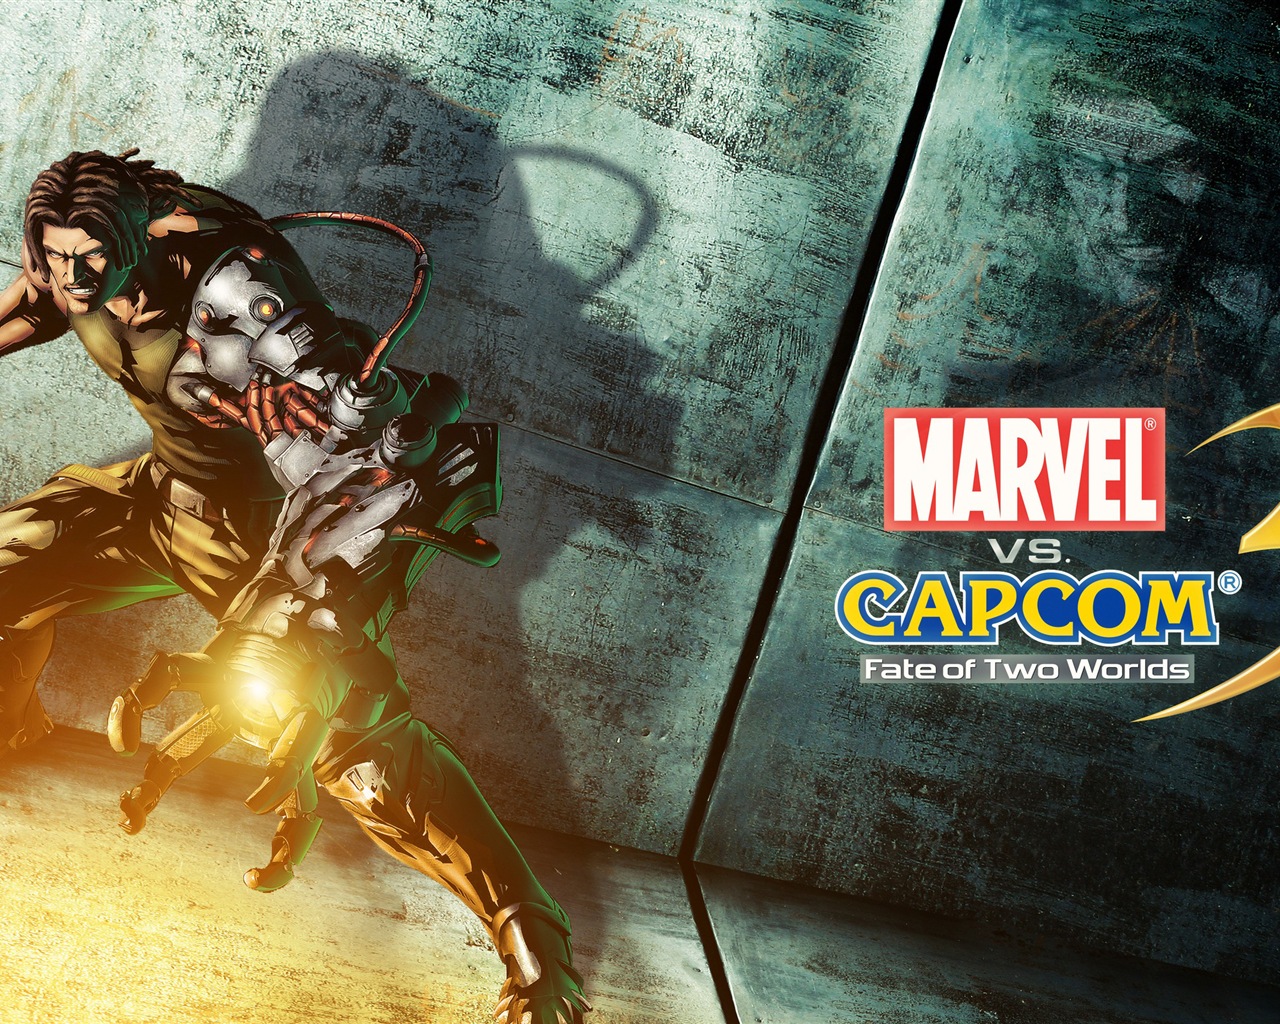 Marvel VS. Capcom 3: Fate of Two Worlds 漫画英雄VS.卡普空3 高清游戏壁纸8 - 1280x1024